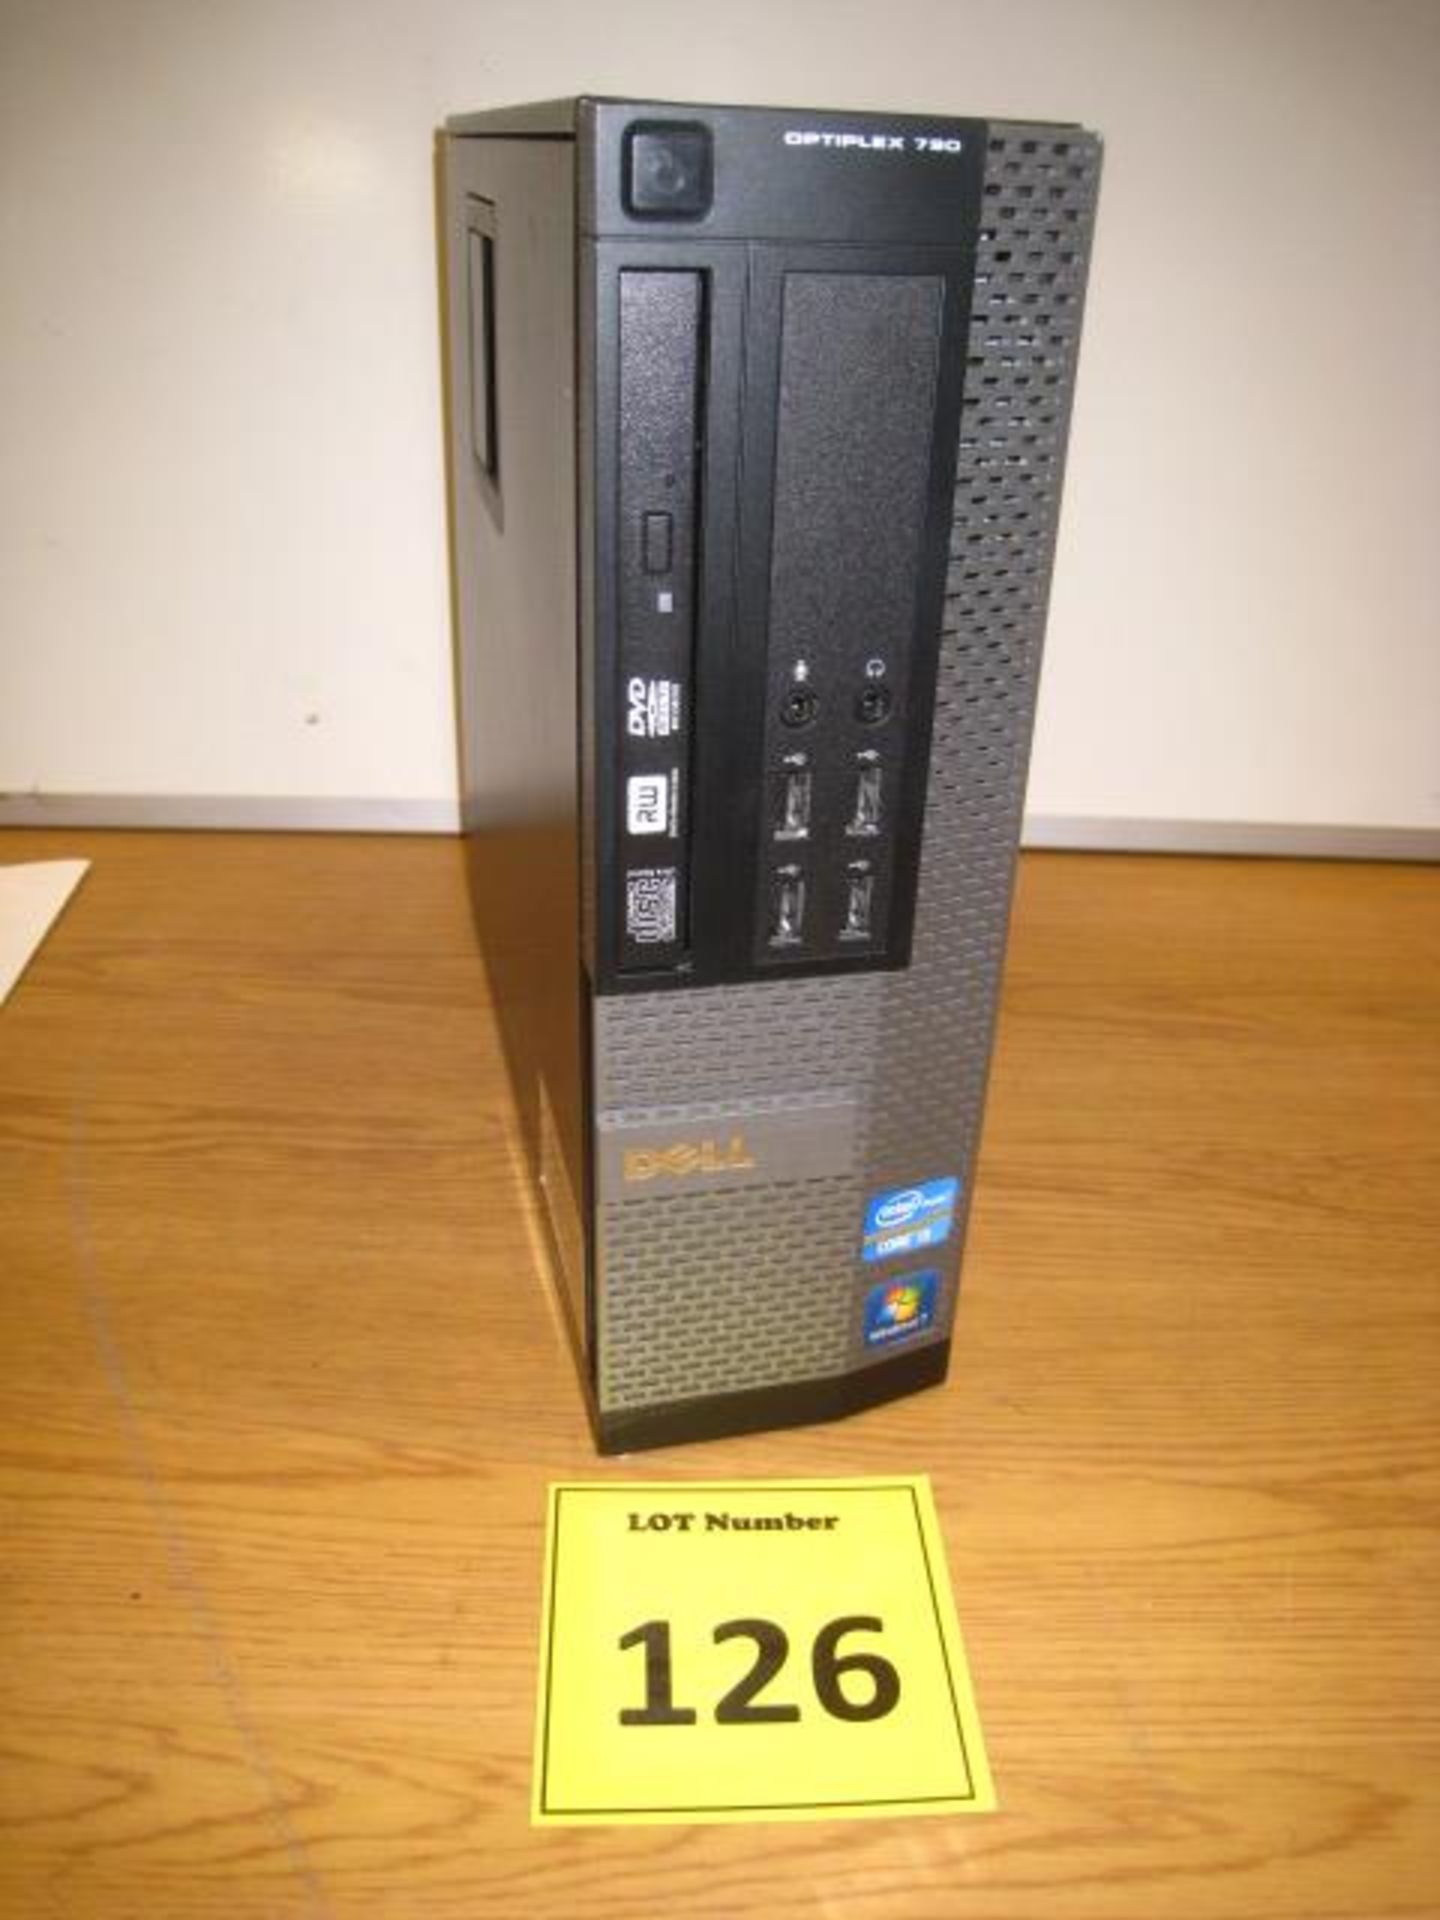 DELL 790 SMALL FORM FACTOR COMPUTER. CORE i3 3.3GHZ PROCESSOR, 4GB RAM, 250GB HDD, DVDRW. WINDOWS